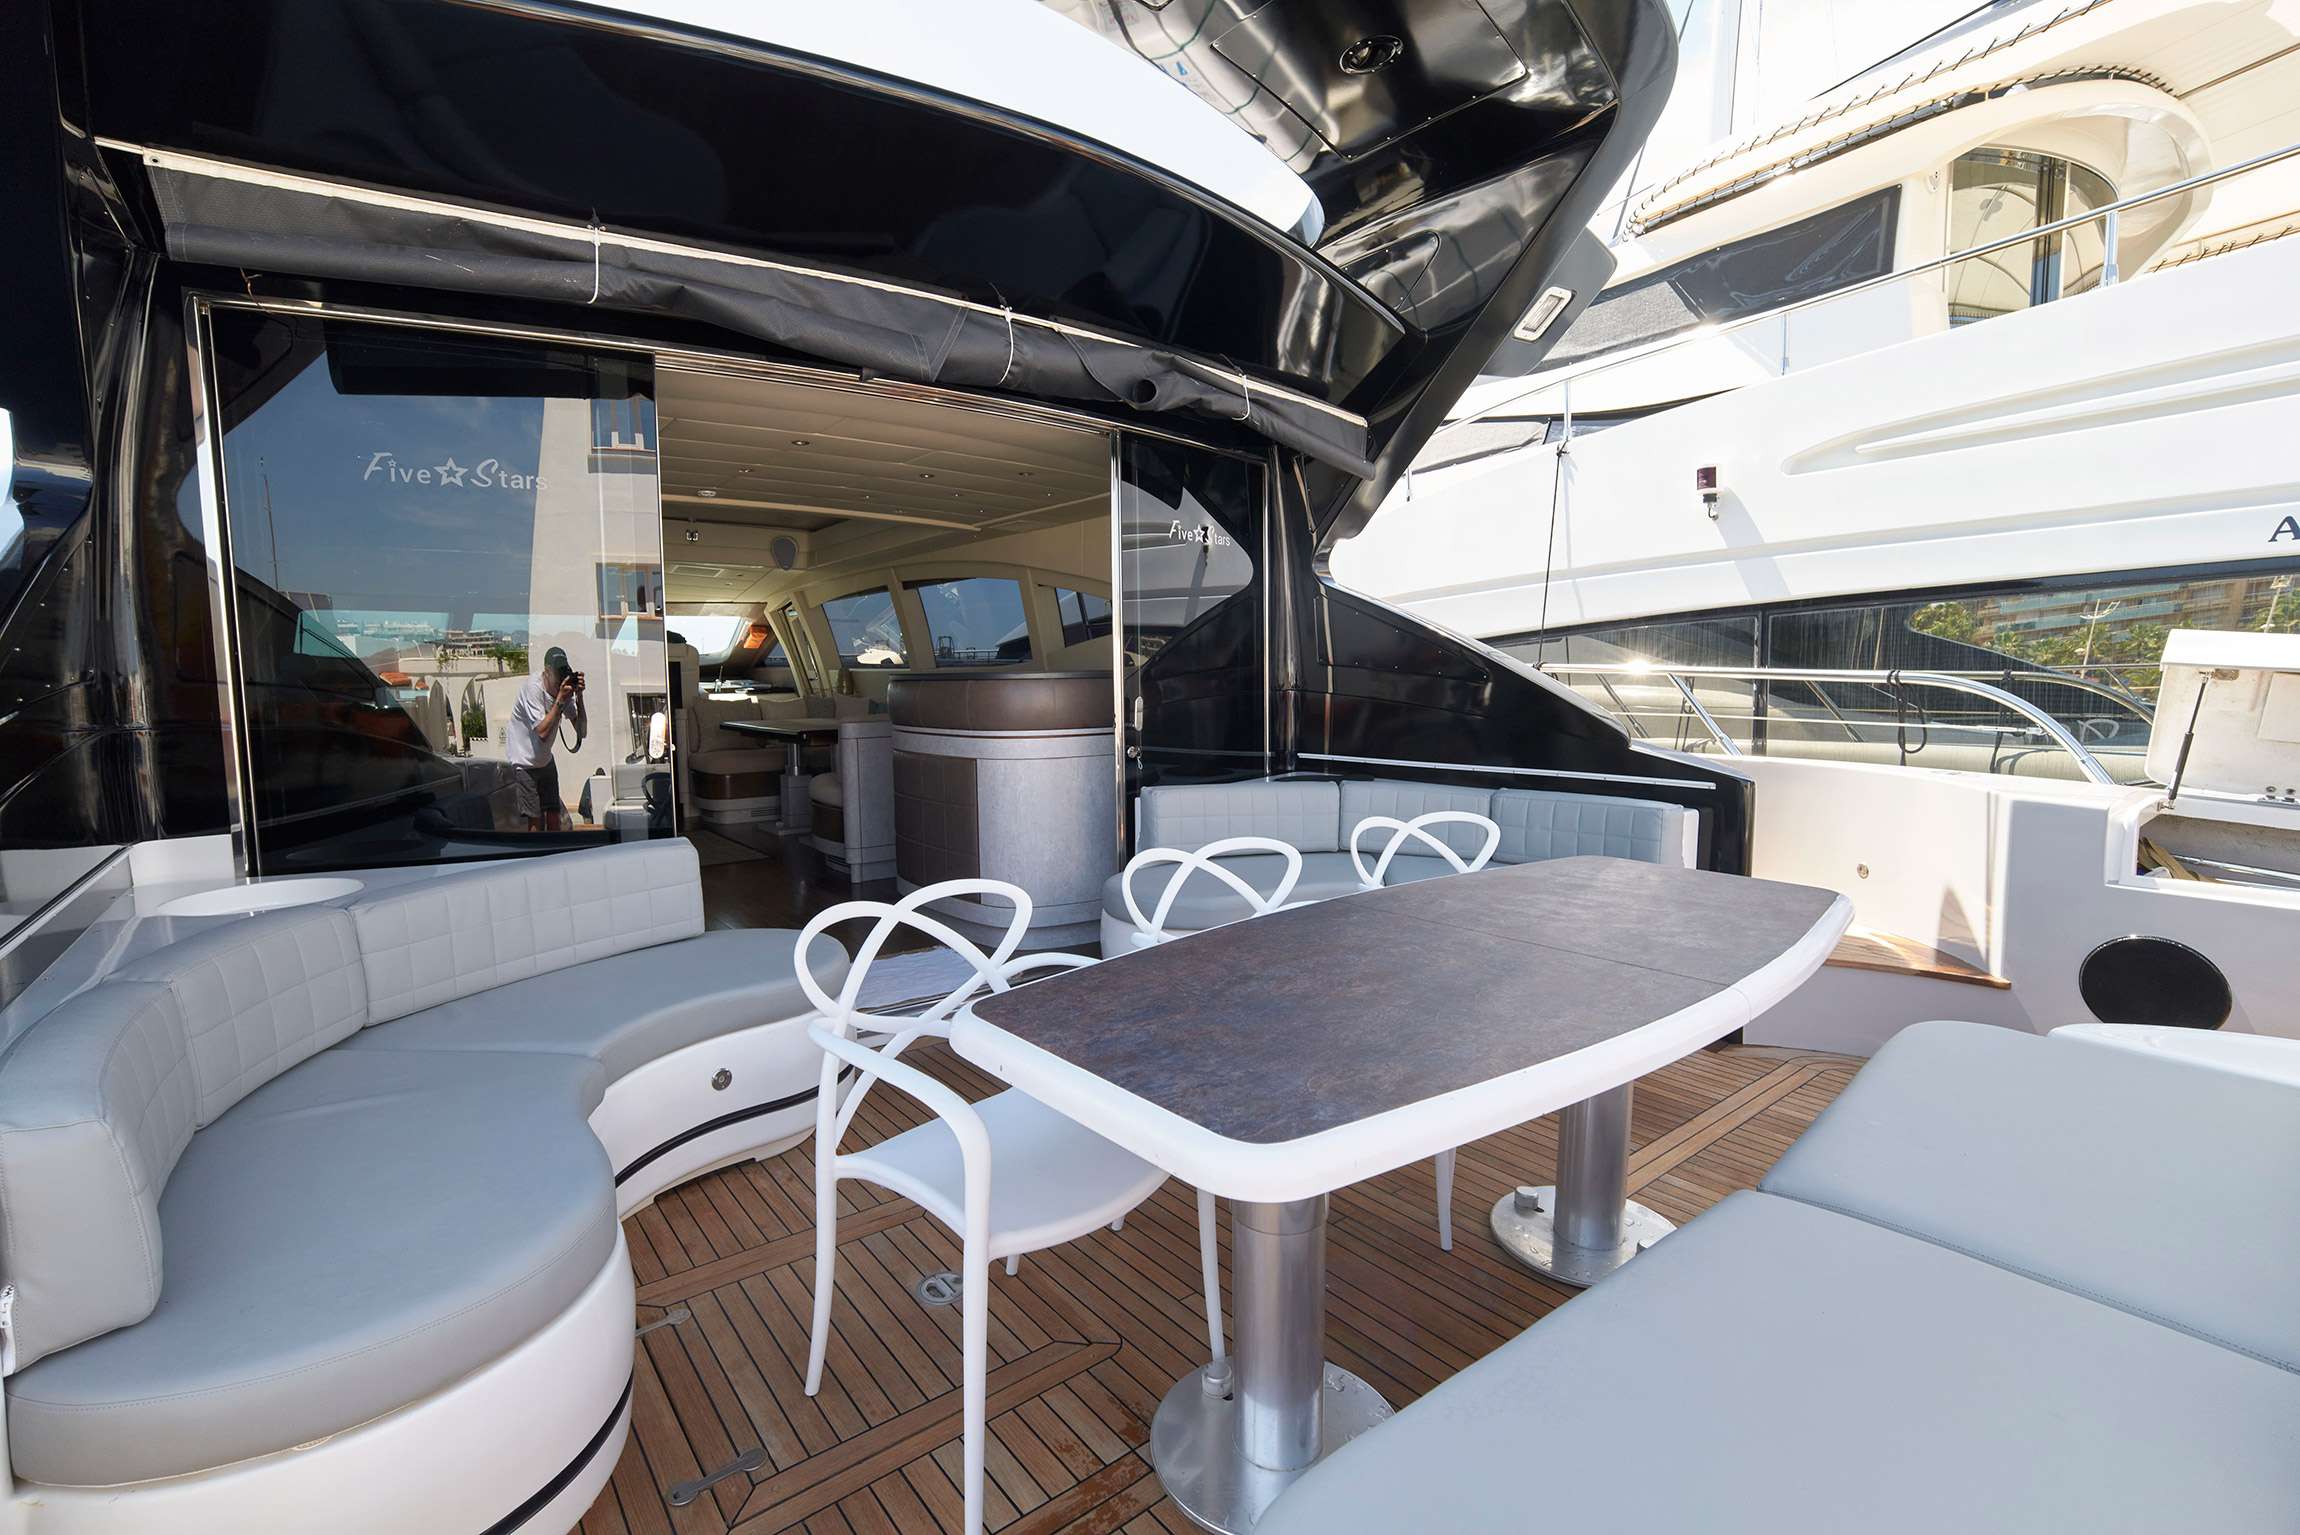 FIVE STARS - Yacht Charter Mahon & Boat hire in Balearics & Spain 3